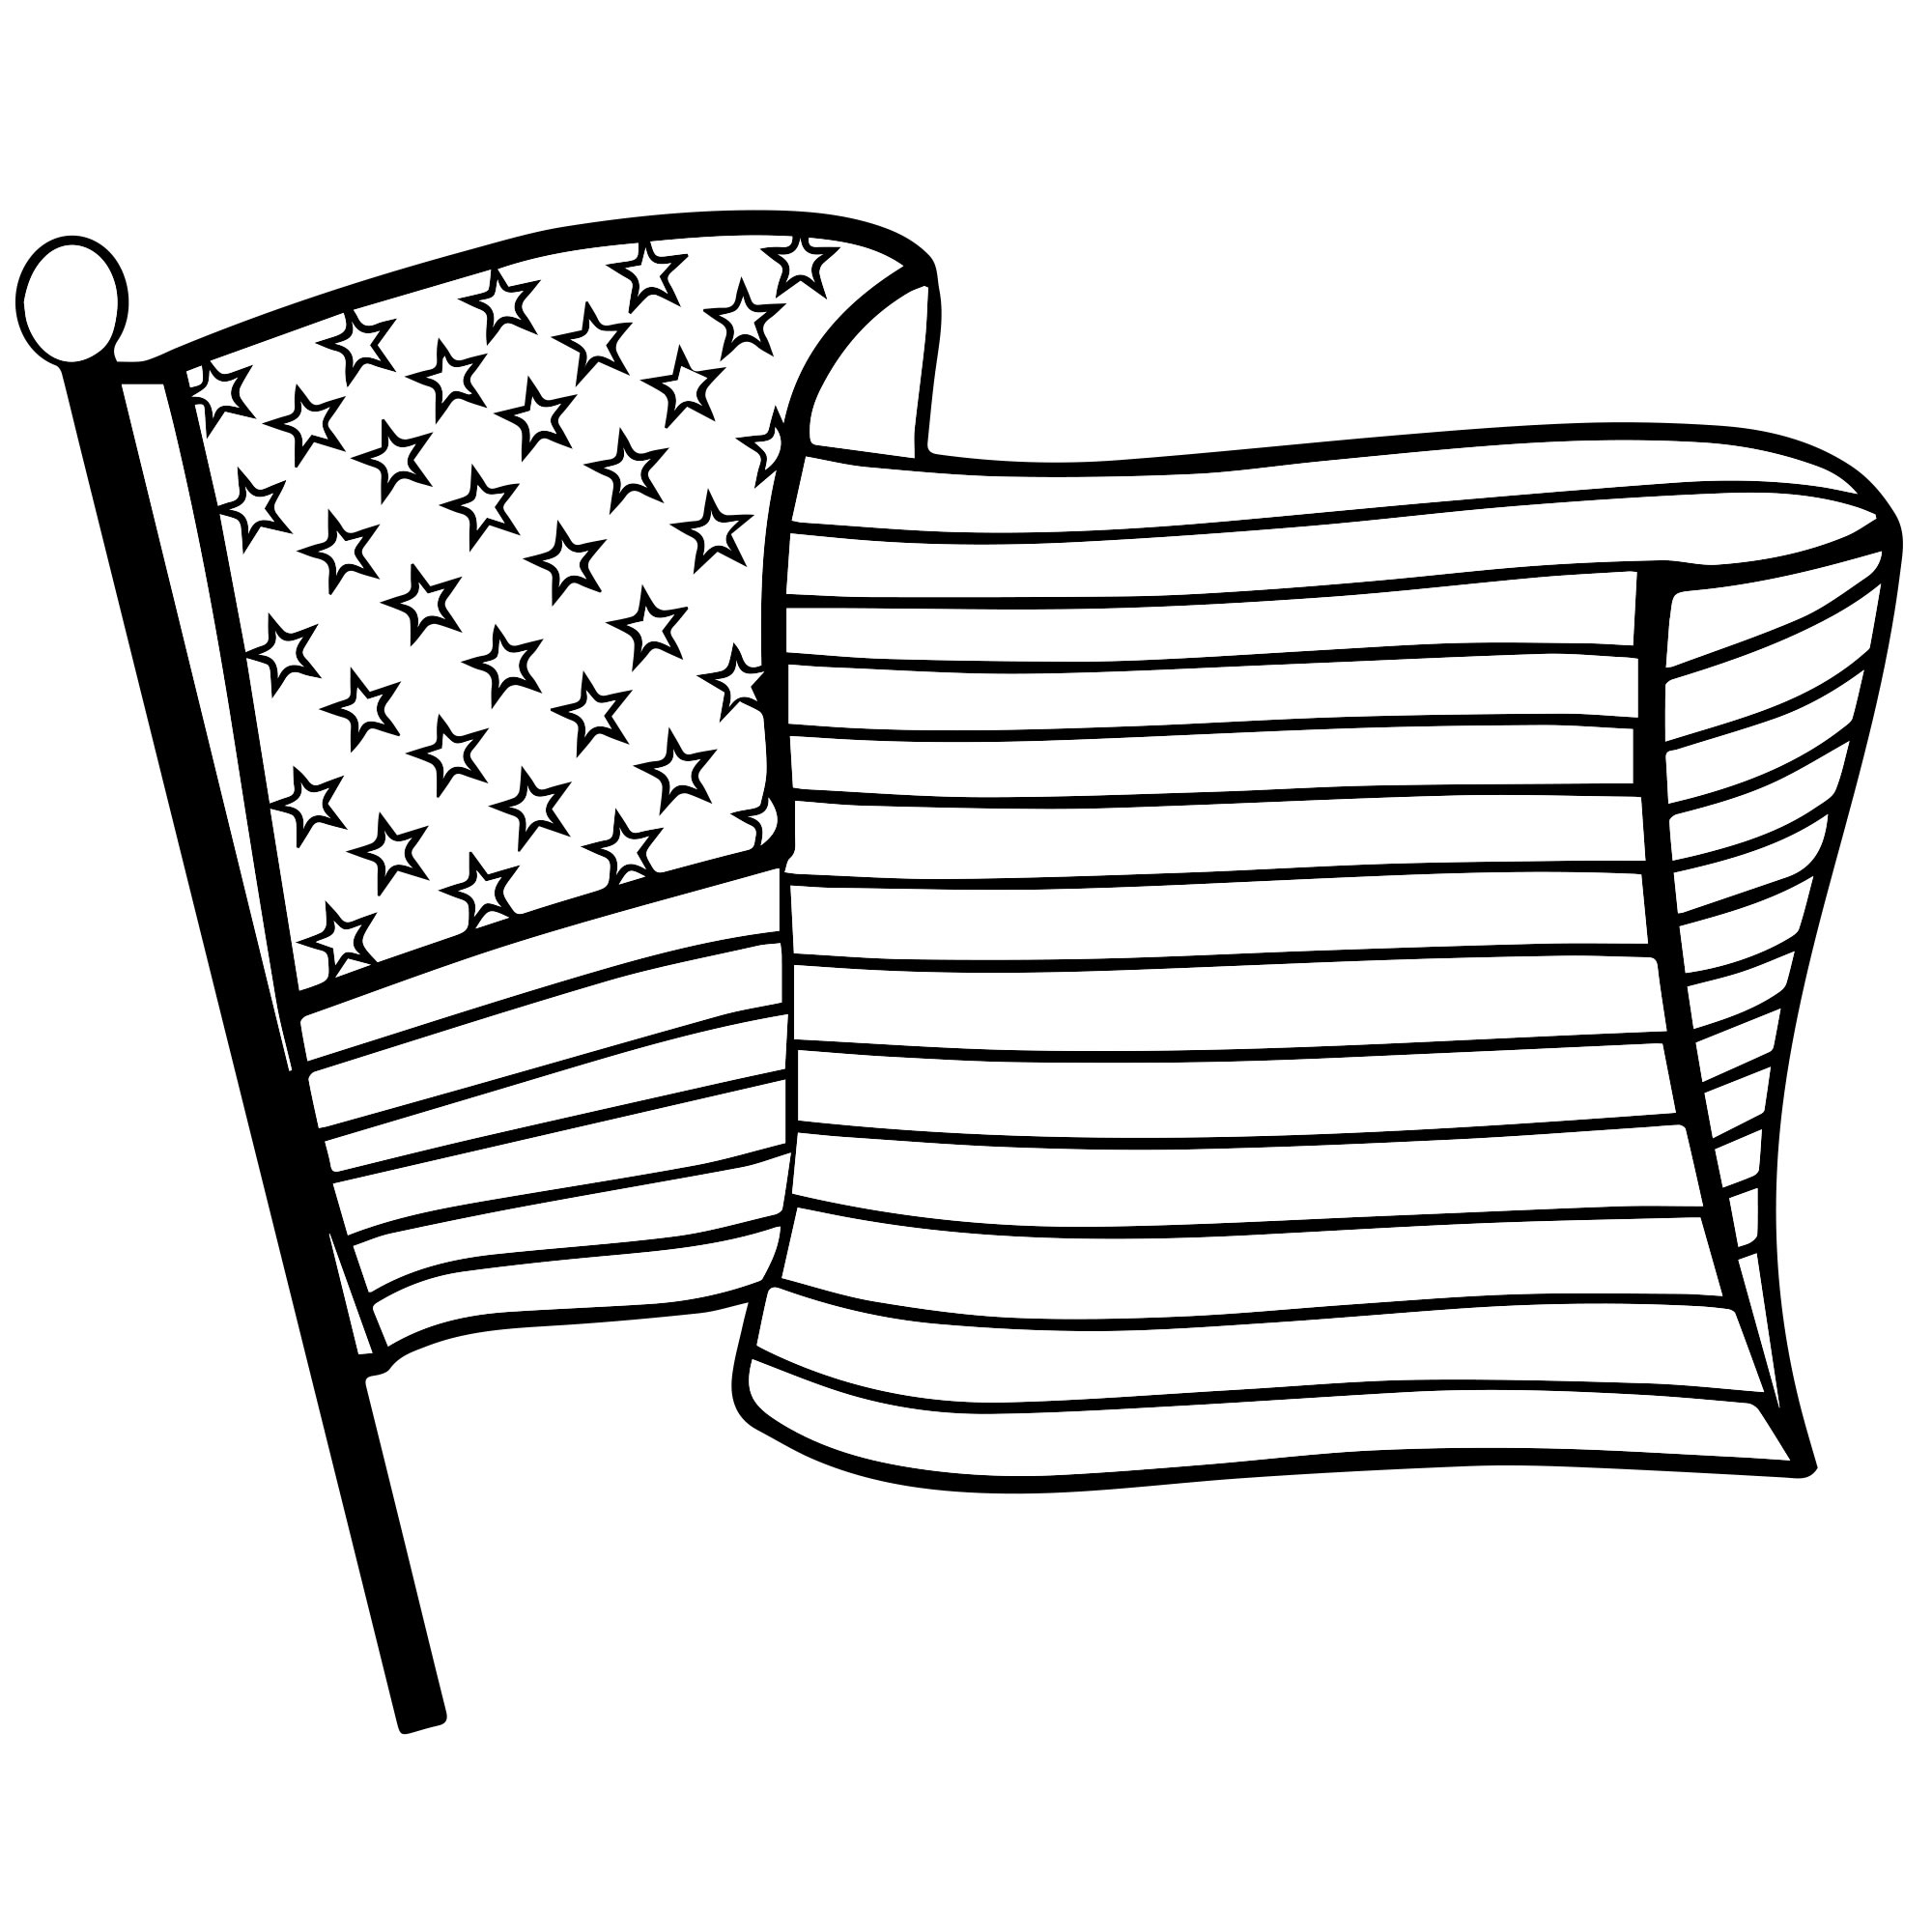 Картинки флаги раскраски. Американский флаг раскраска. Флаг рисунок. Американский флаг для разукрашивания. Знамя раскраска.